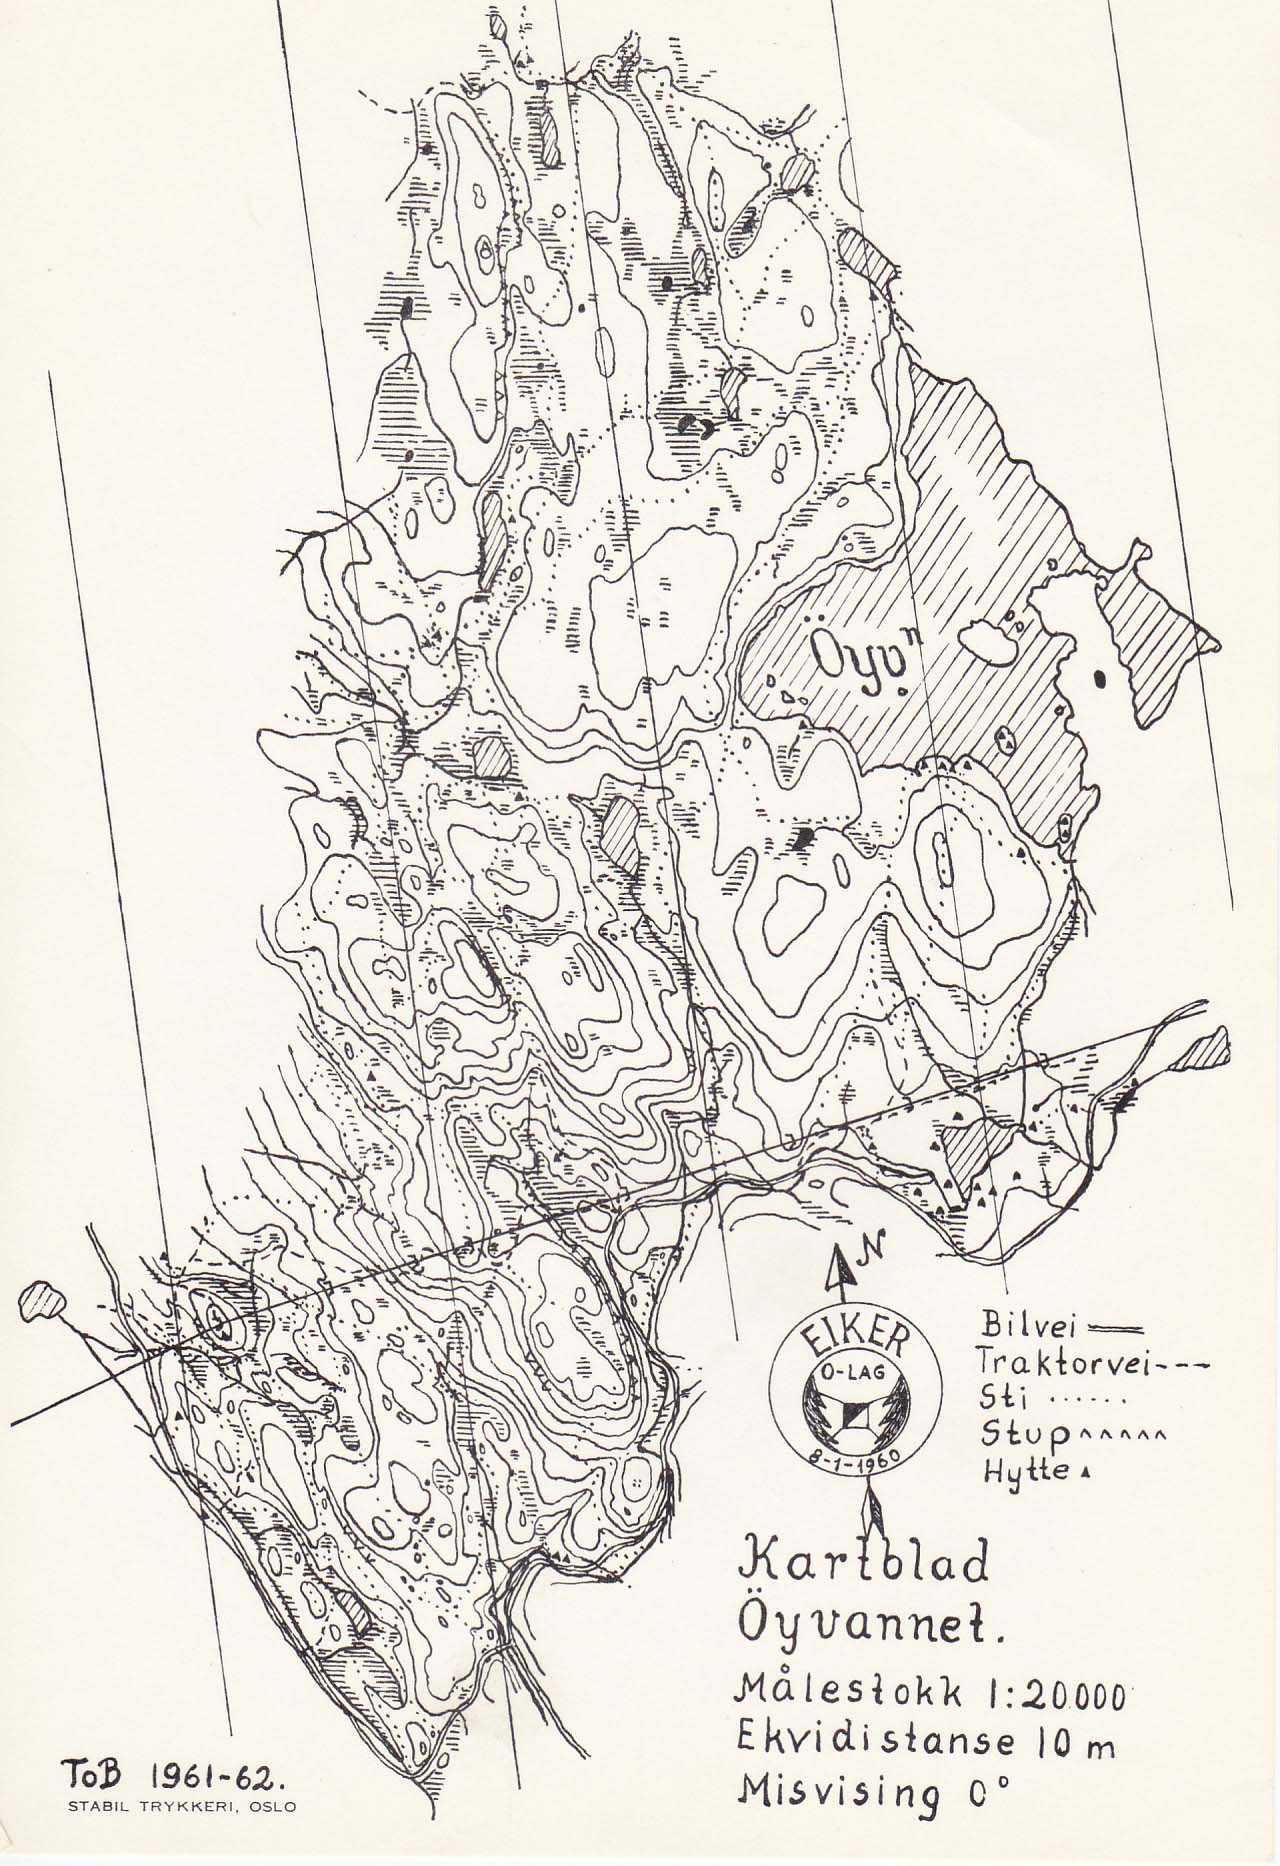 Øyvannet (01-05-1962)